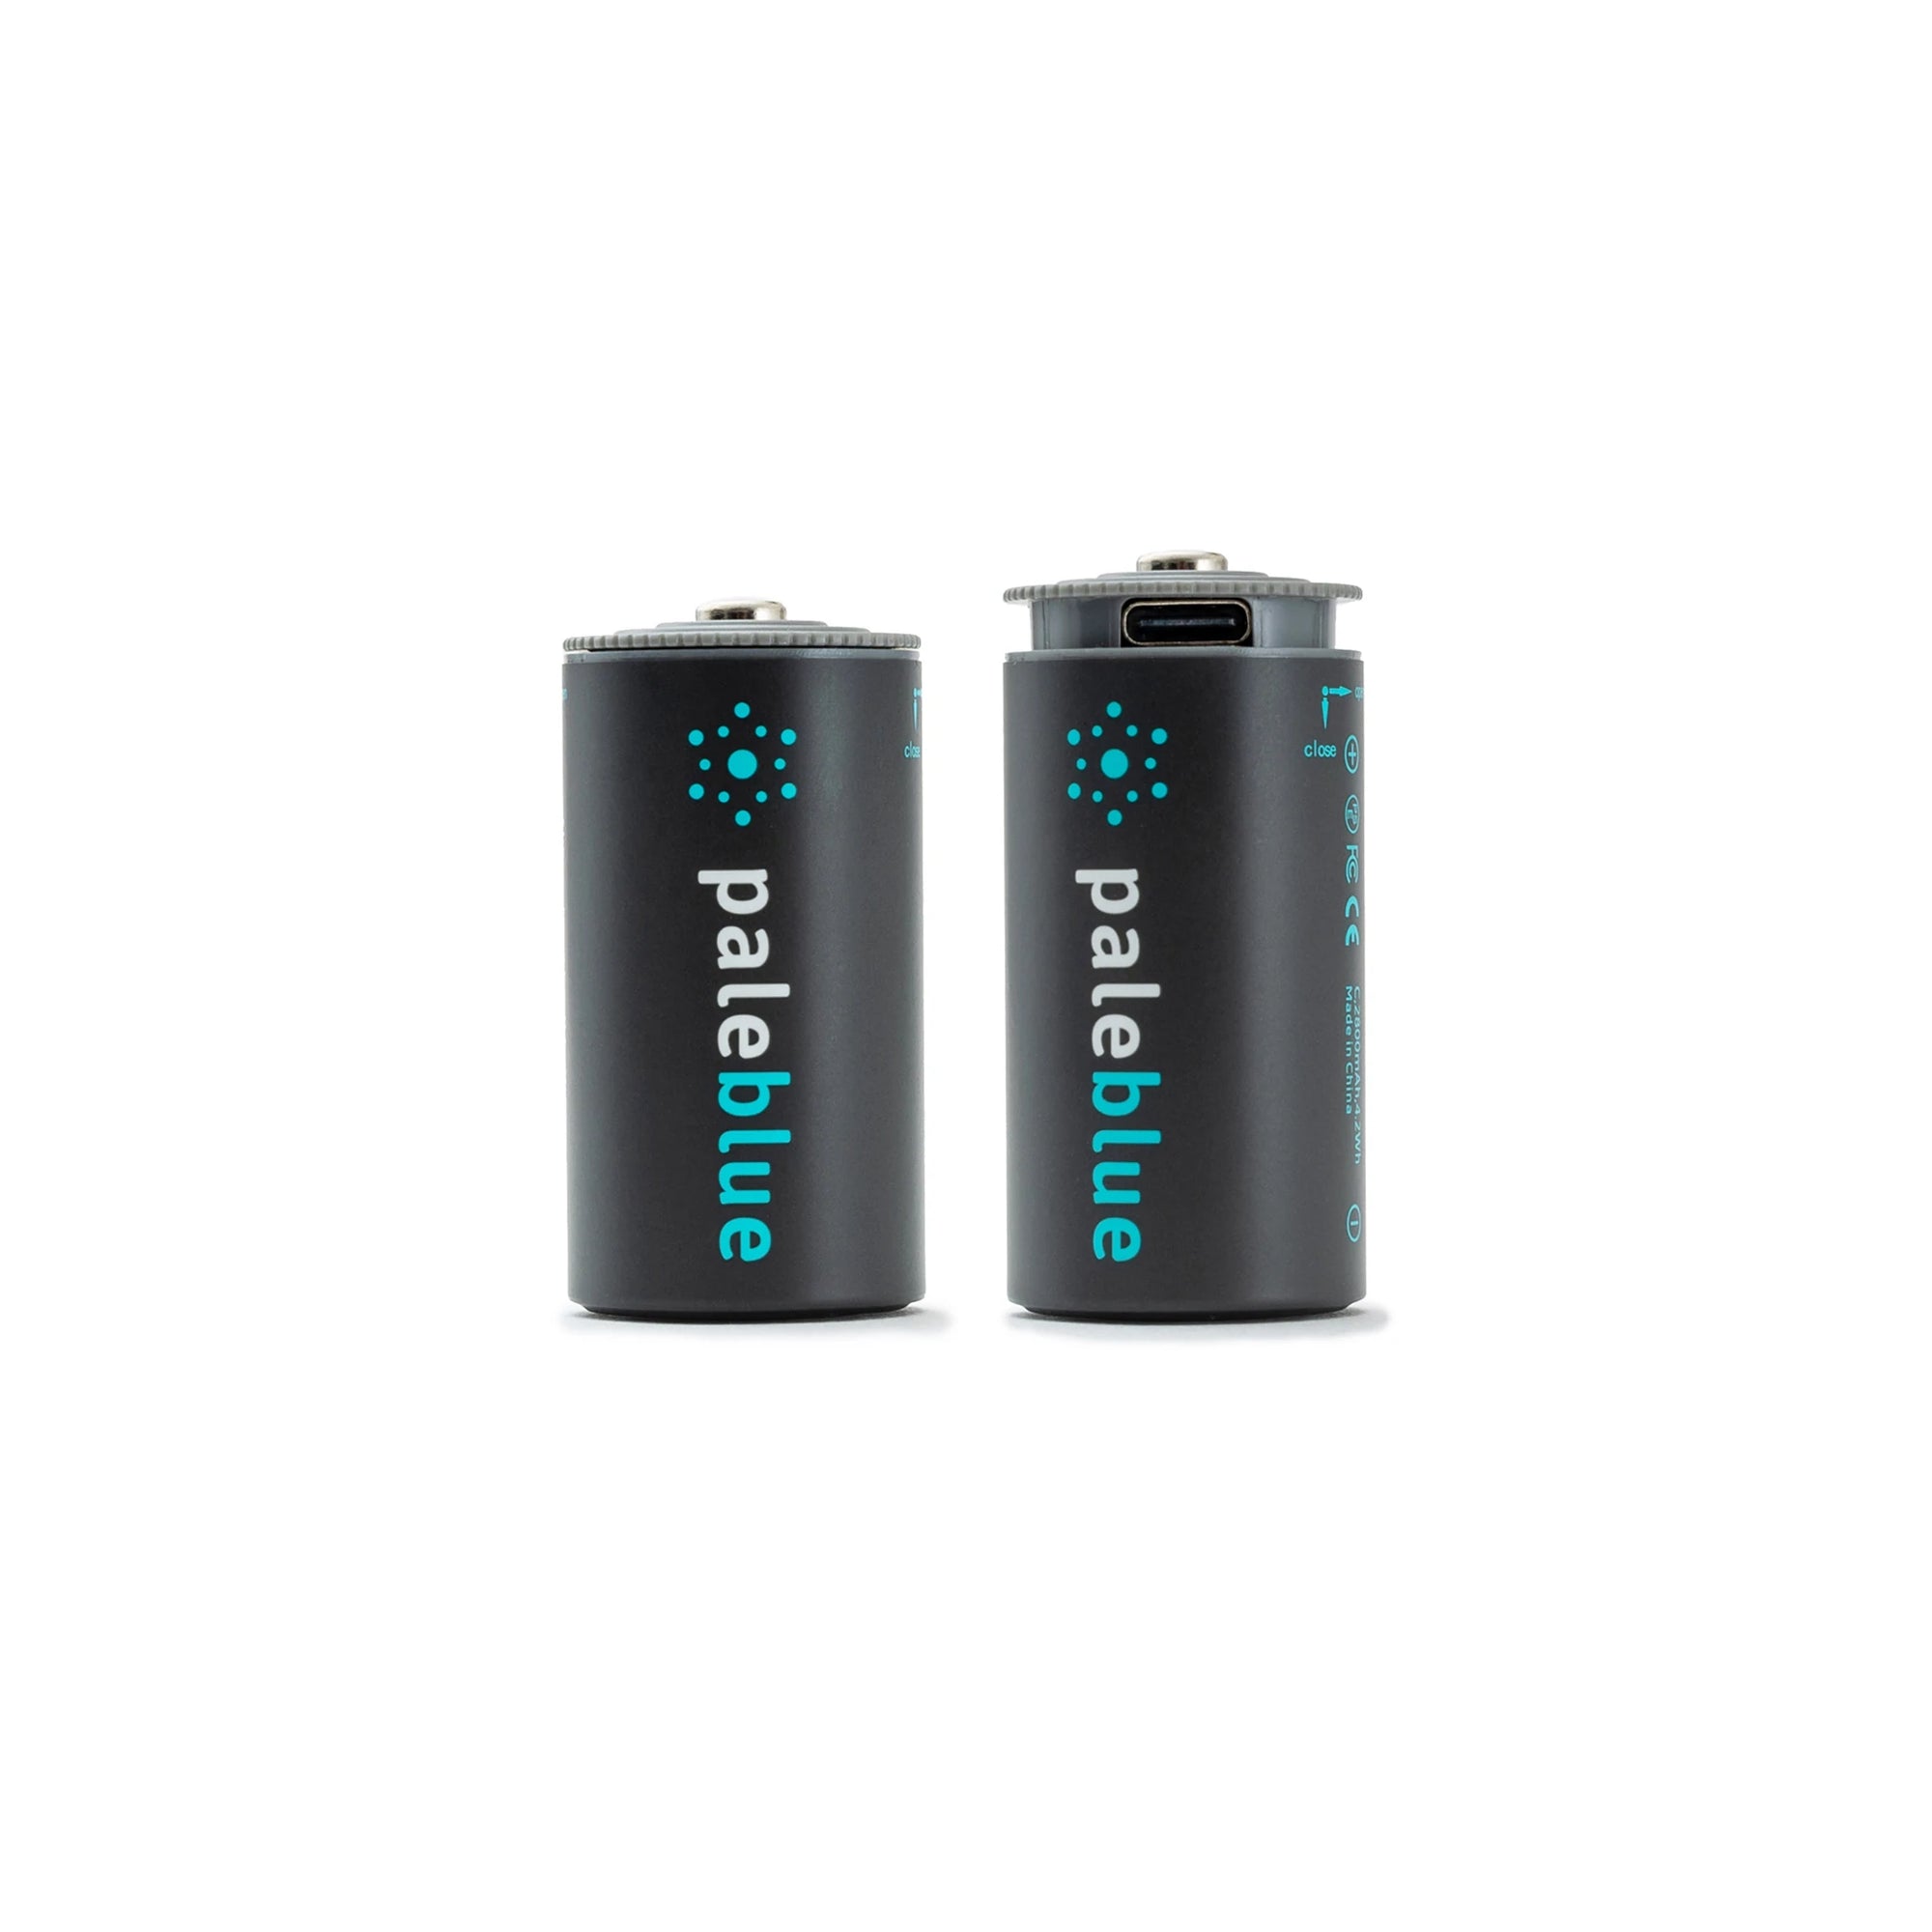 Piles rechargeables USB